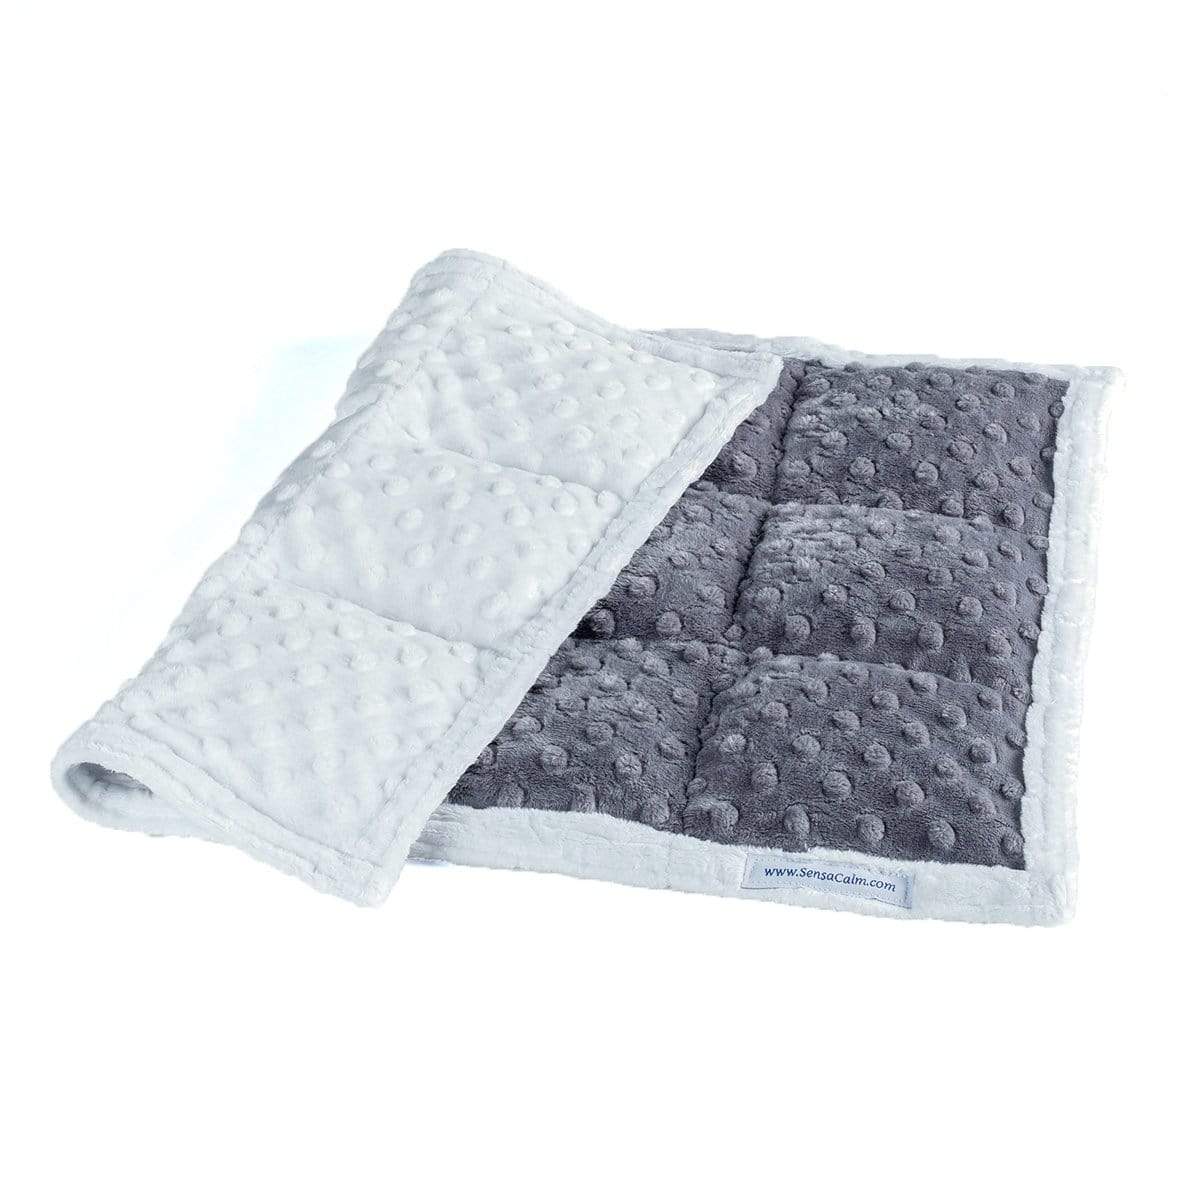 SensaCalm Lap Pads - 2 lb (12" W x 18" L) (Dimple Cuddle) Gray and White